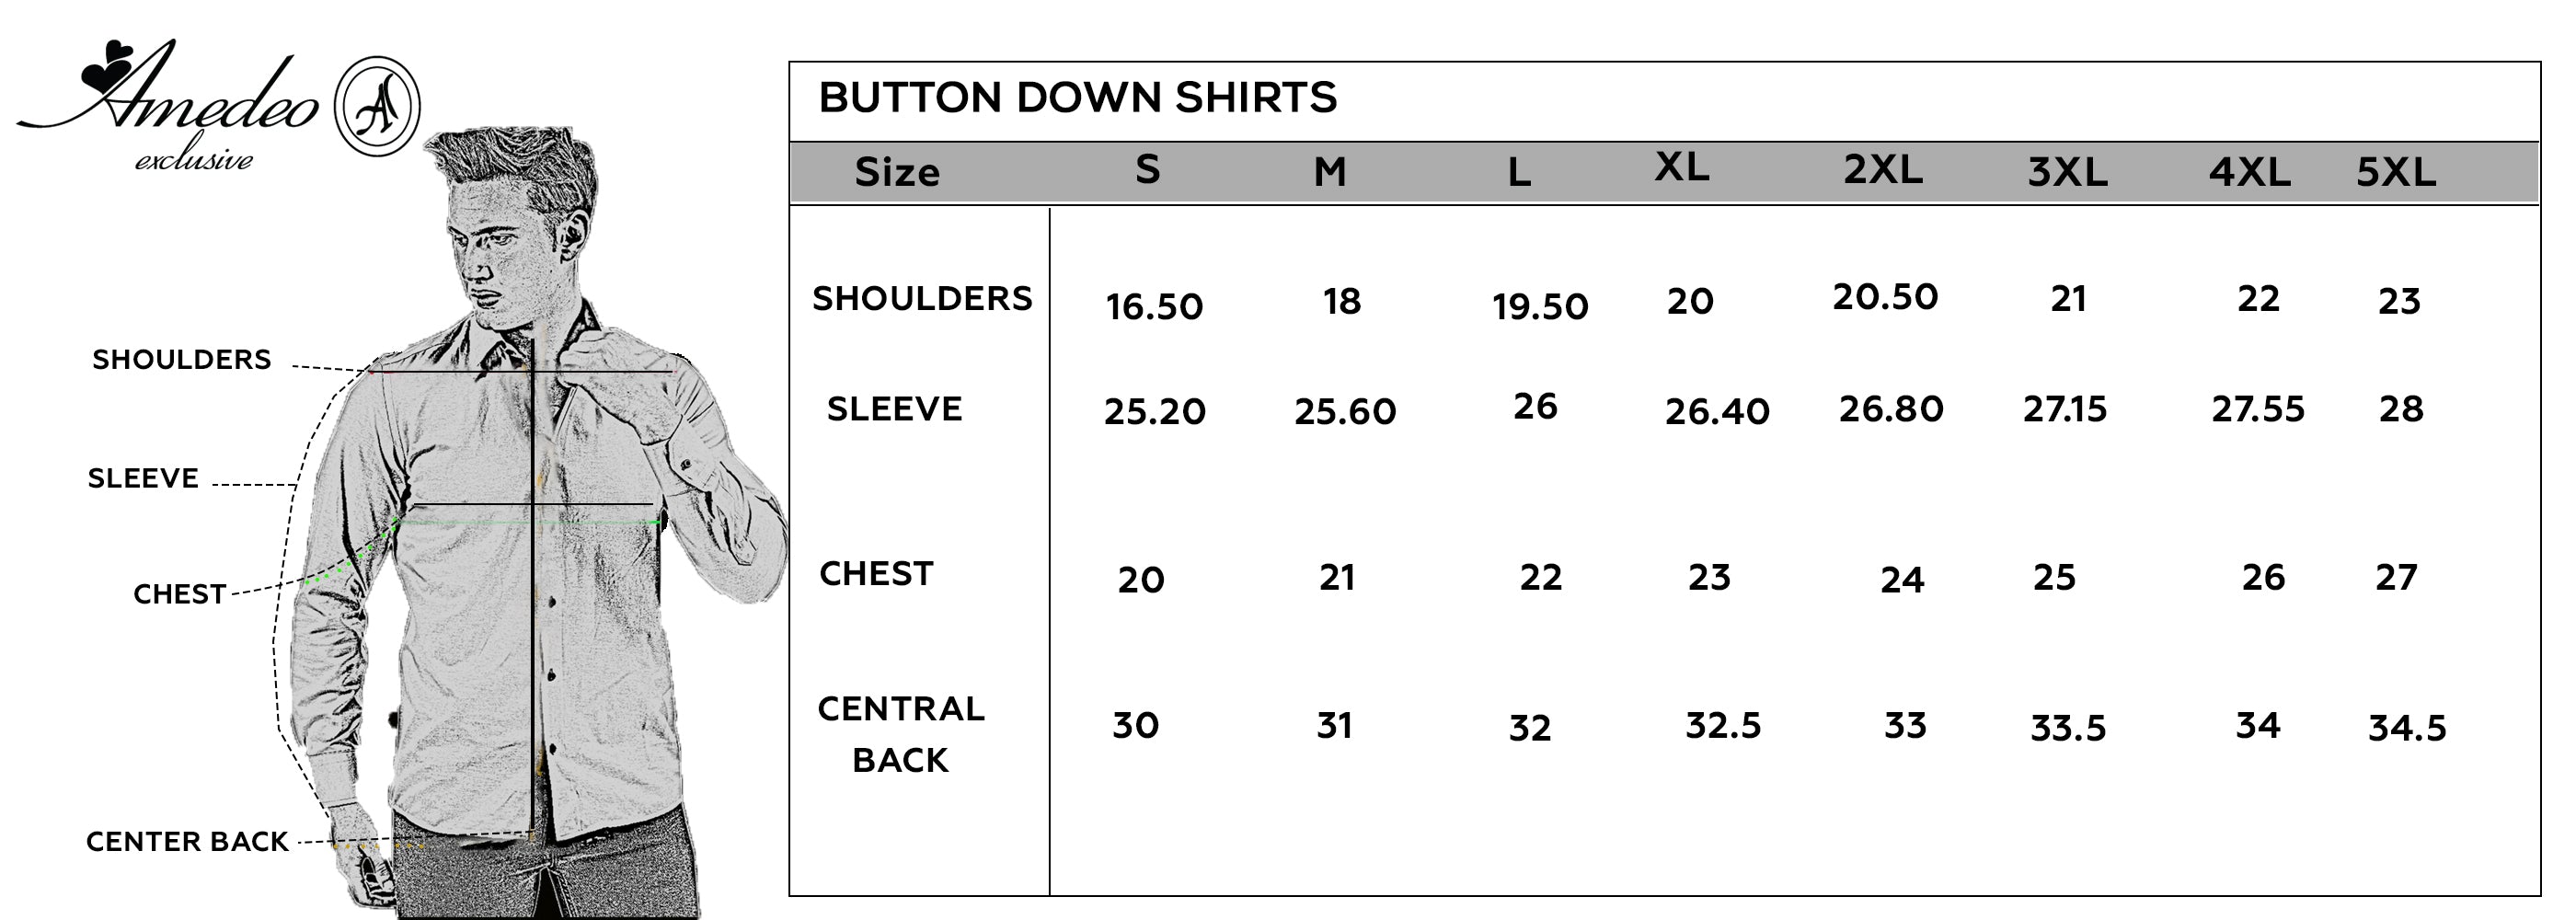 dress shirt sizes